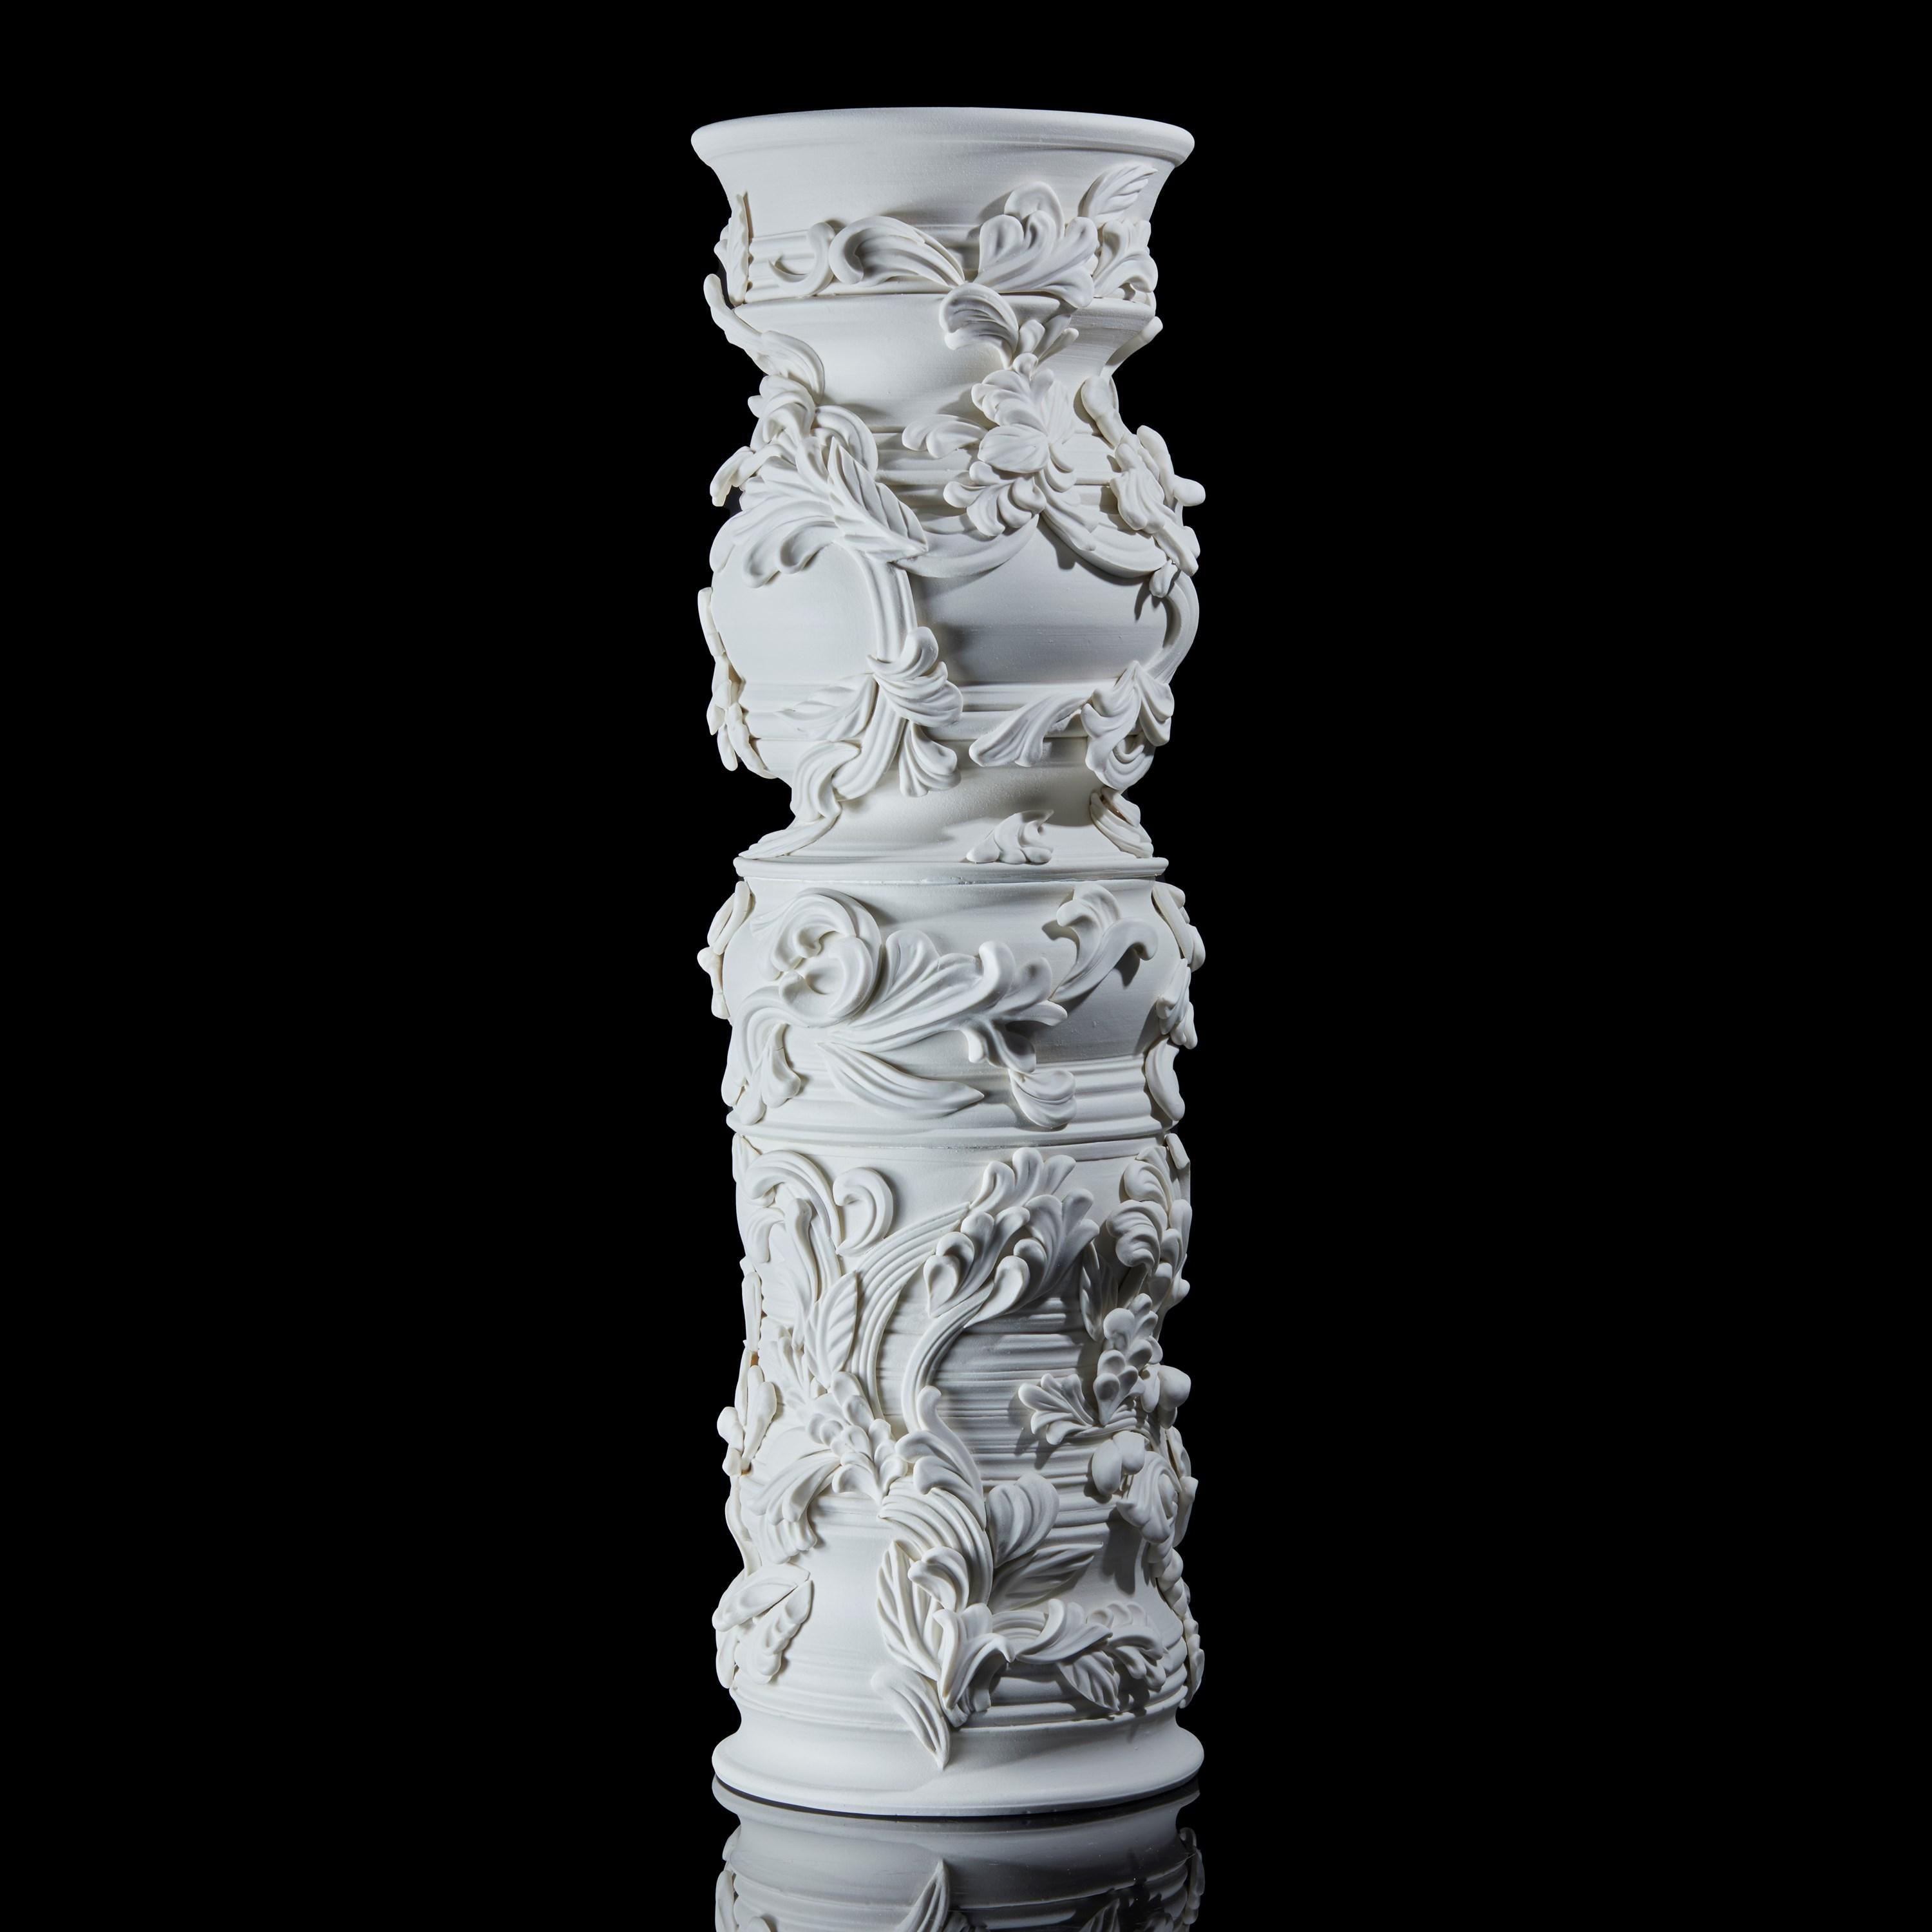 British Promenade III, a Unique Ceramic Sculptural Tall Vase in Porcelain by Jo Taylor